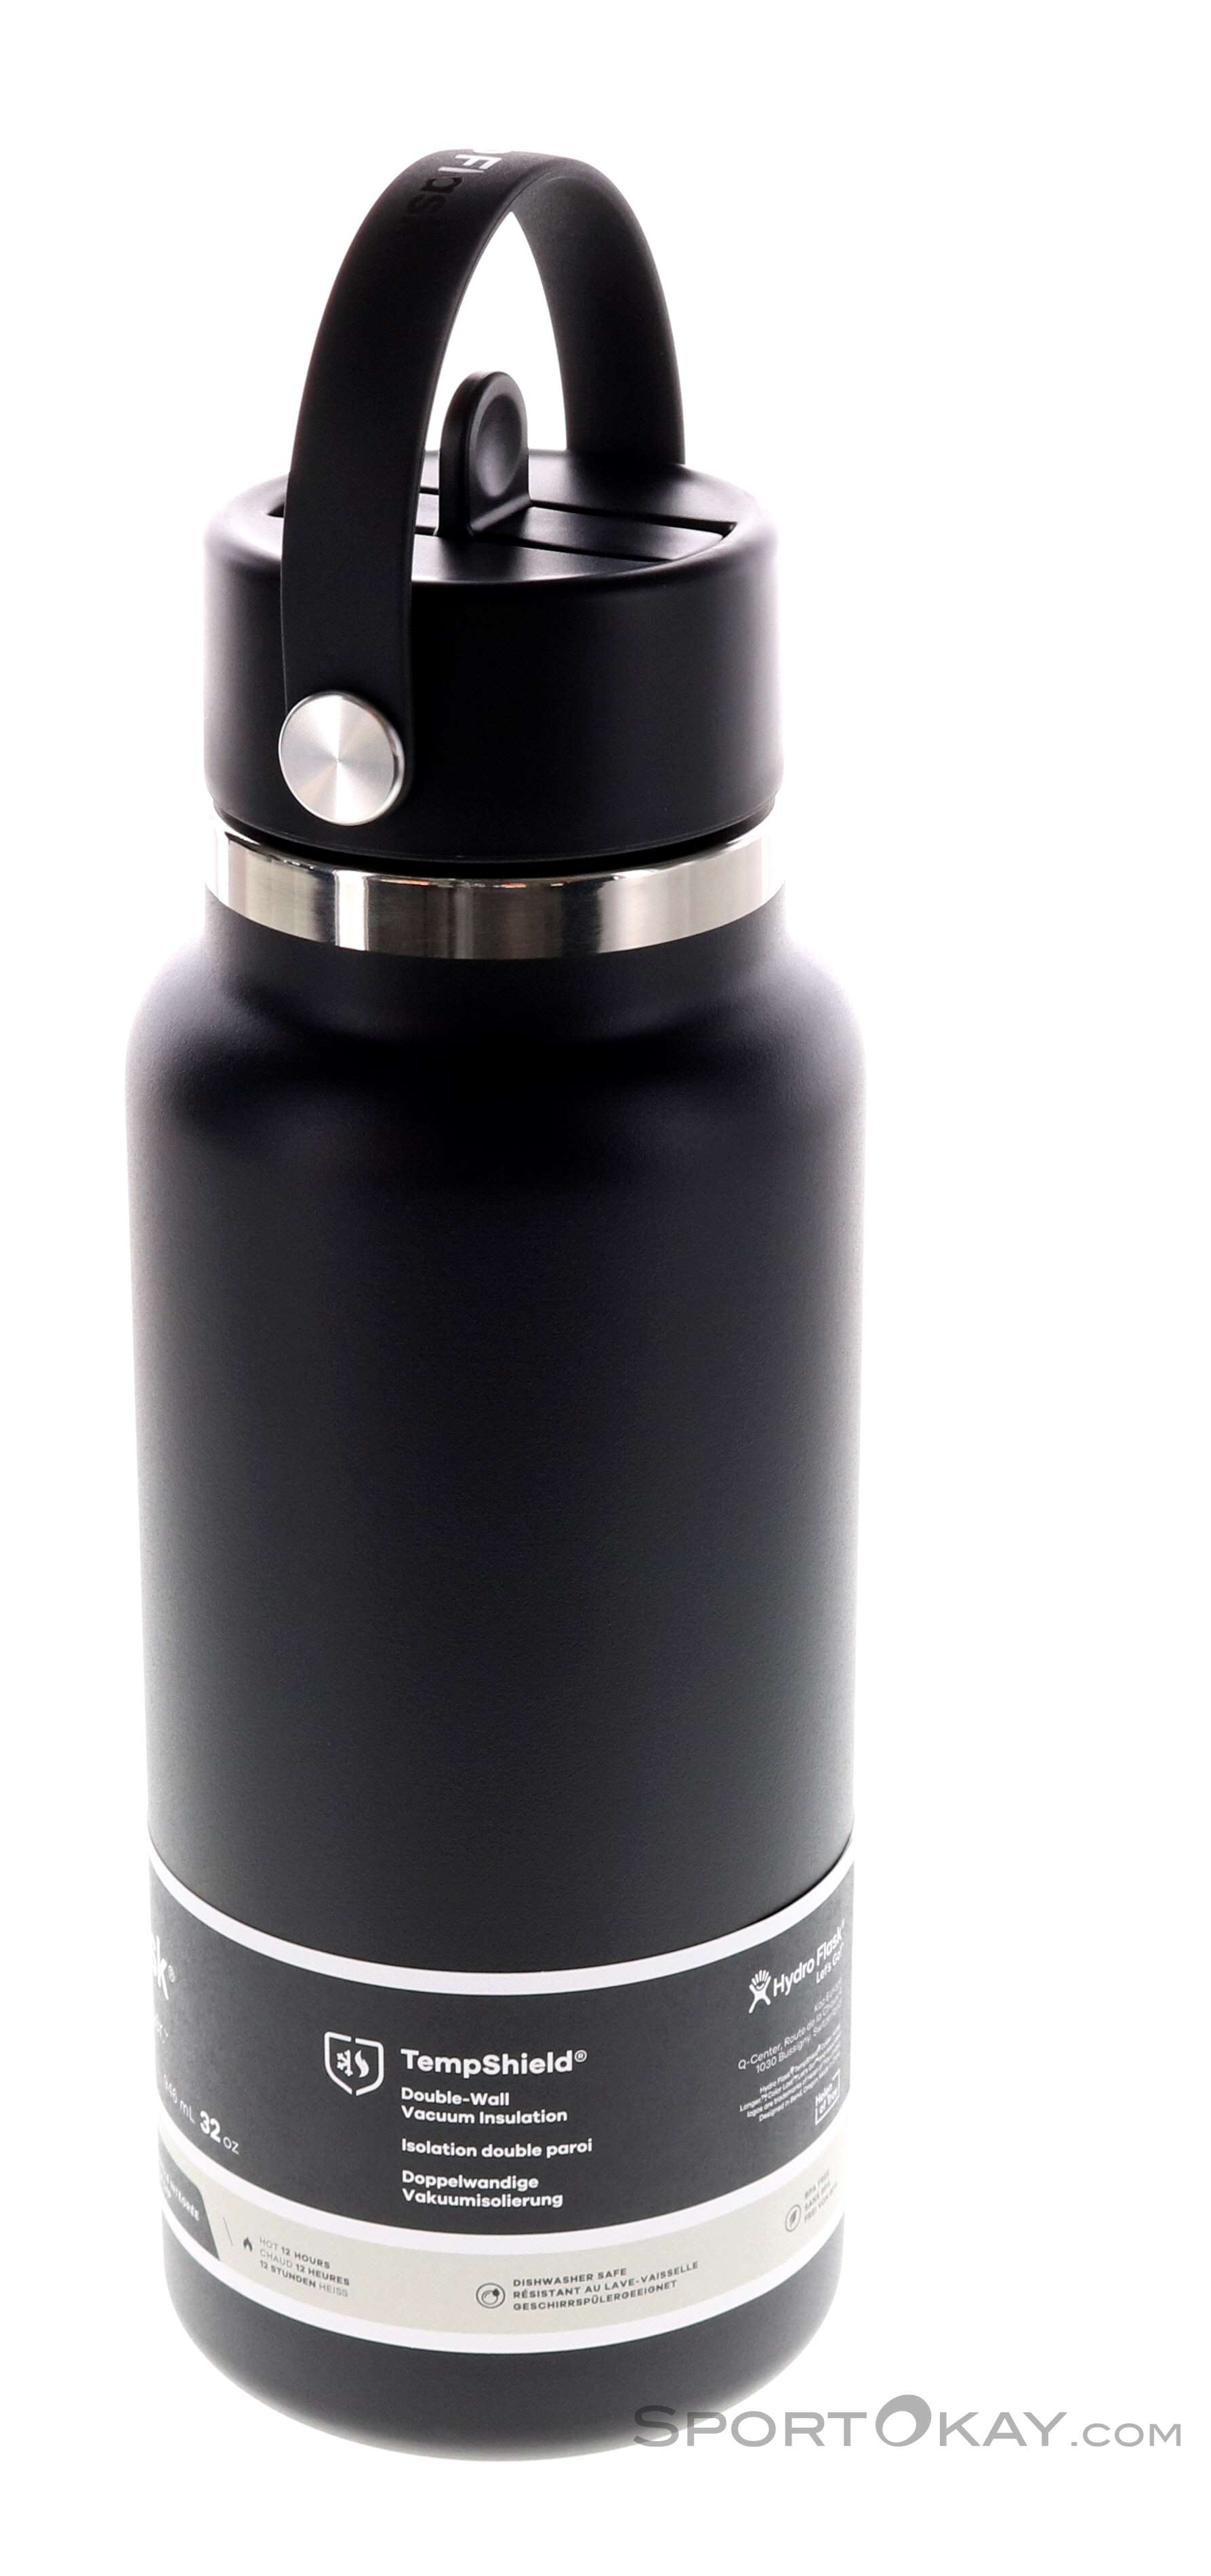 Fox Shox Stainless Steel Water Bottle Black